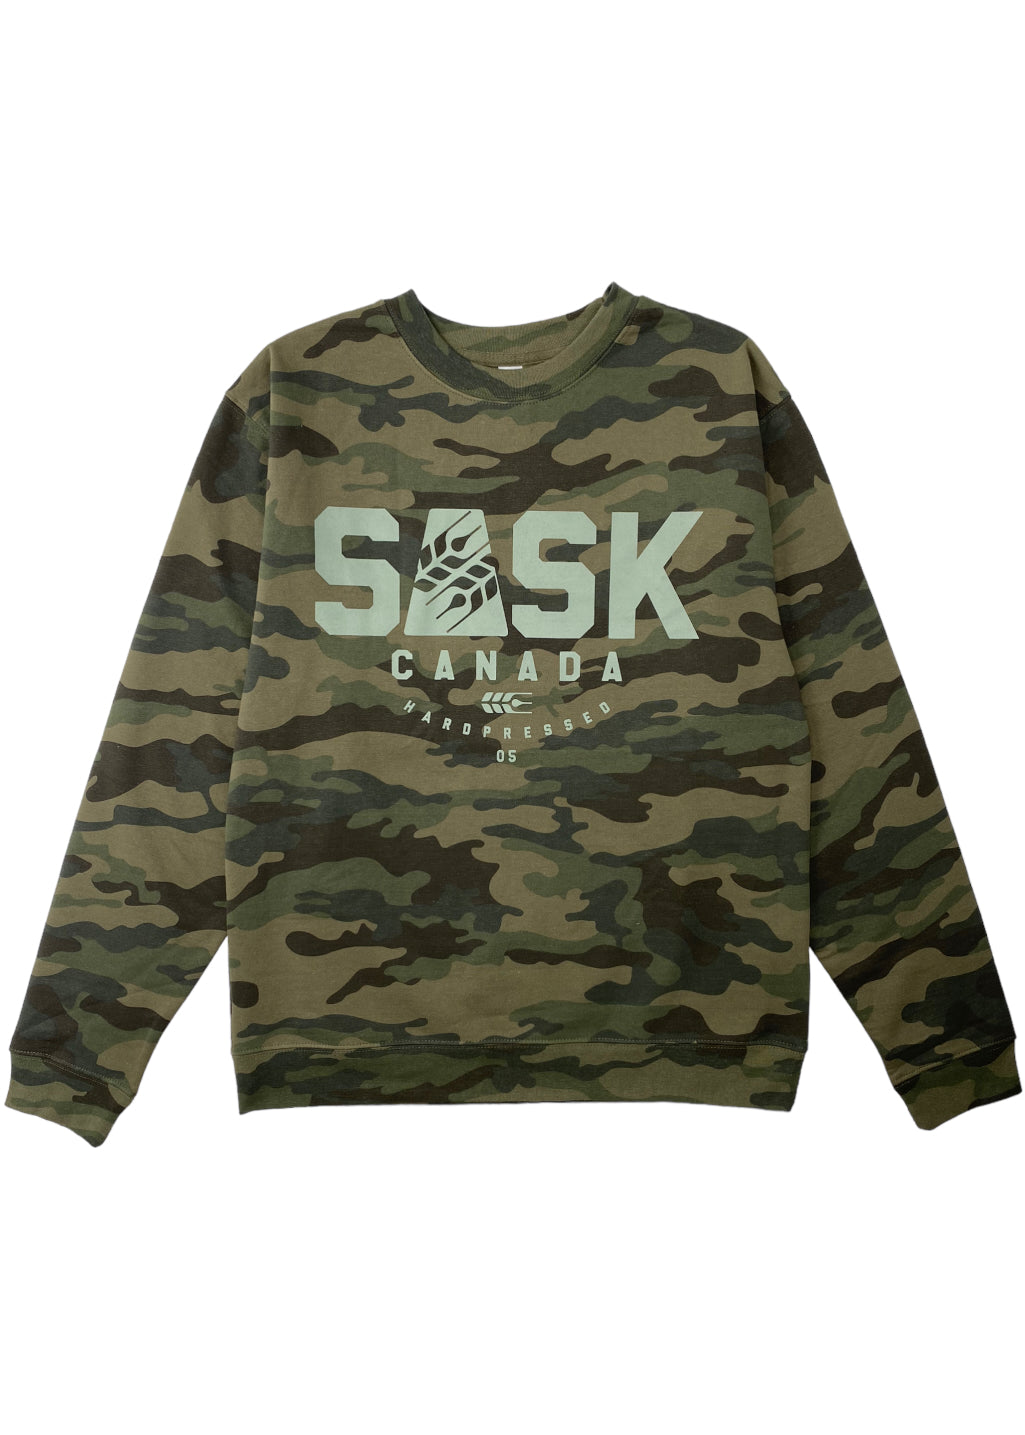 SASK Icon Crewneck v2 | Forest Camo | Unisex - Hardpressed Print Studio Inc.